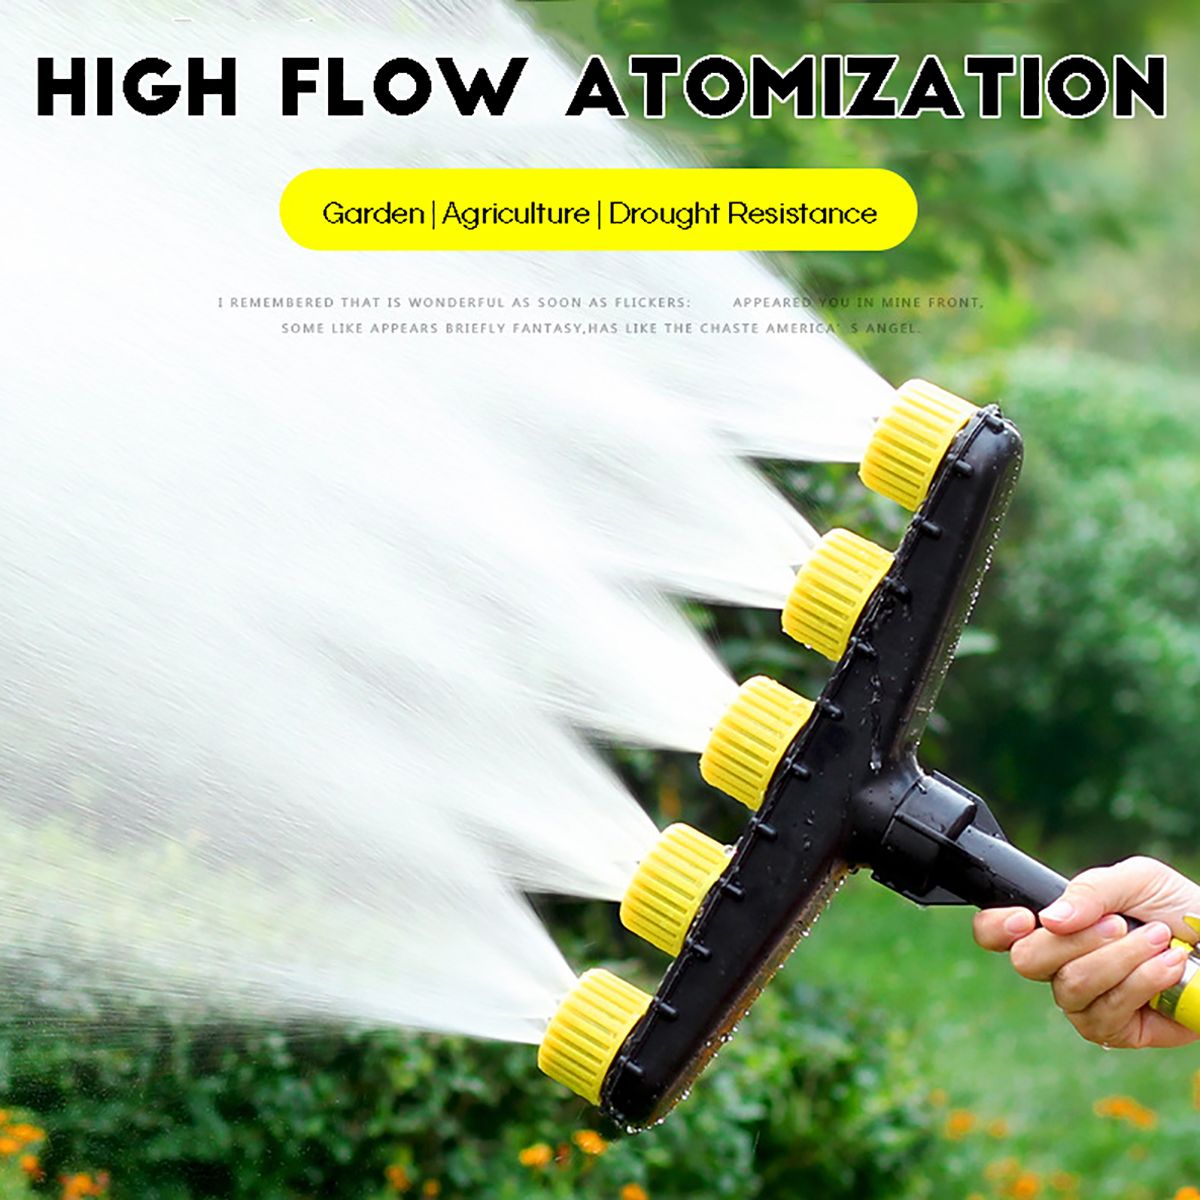 3456-Nozzles-Atomization-Drip-Water-Sprayer-Irrigation-Sprinkler-Kit-for-Agriculture-Lawn-Garden-Pat-1690428